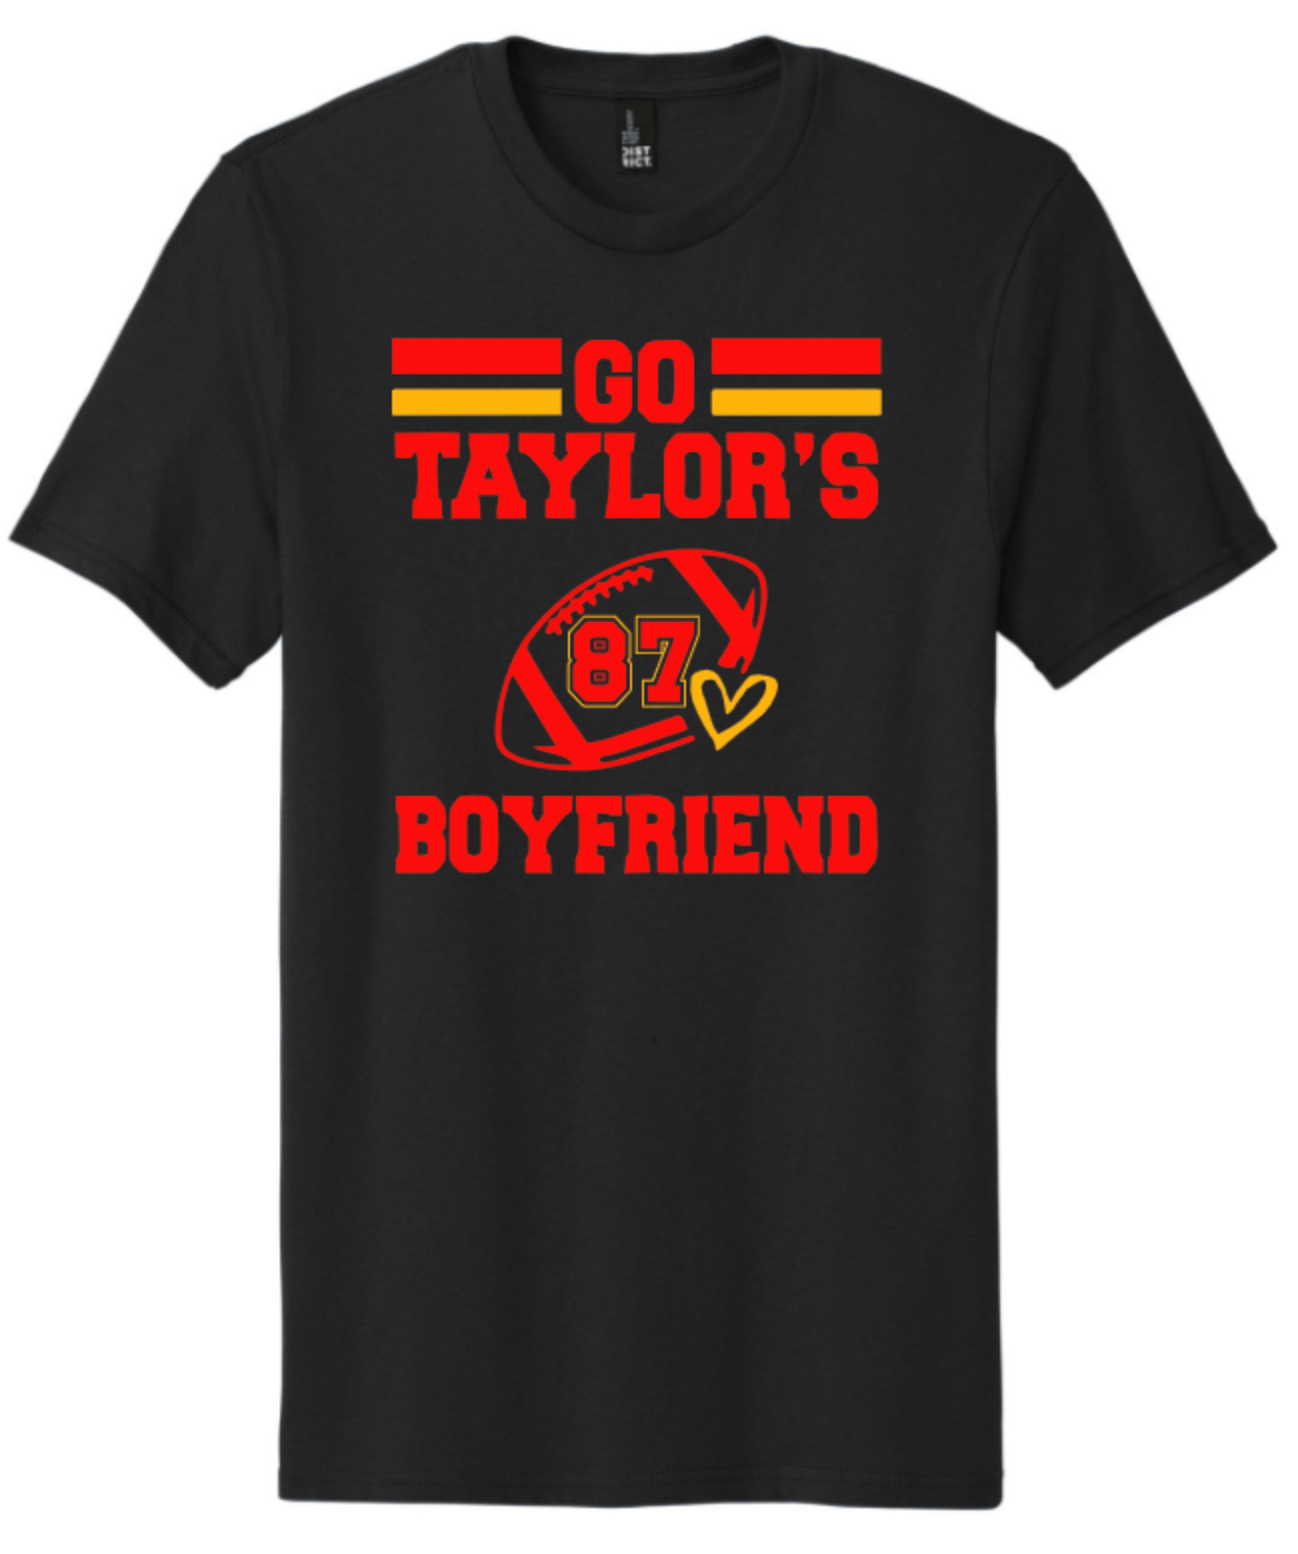 GO TAYLOR'S BOYFRIEND